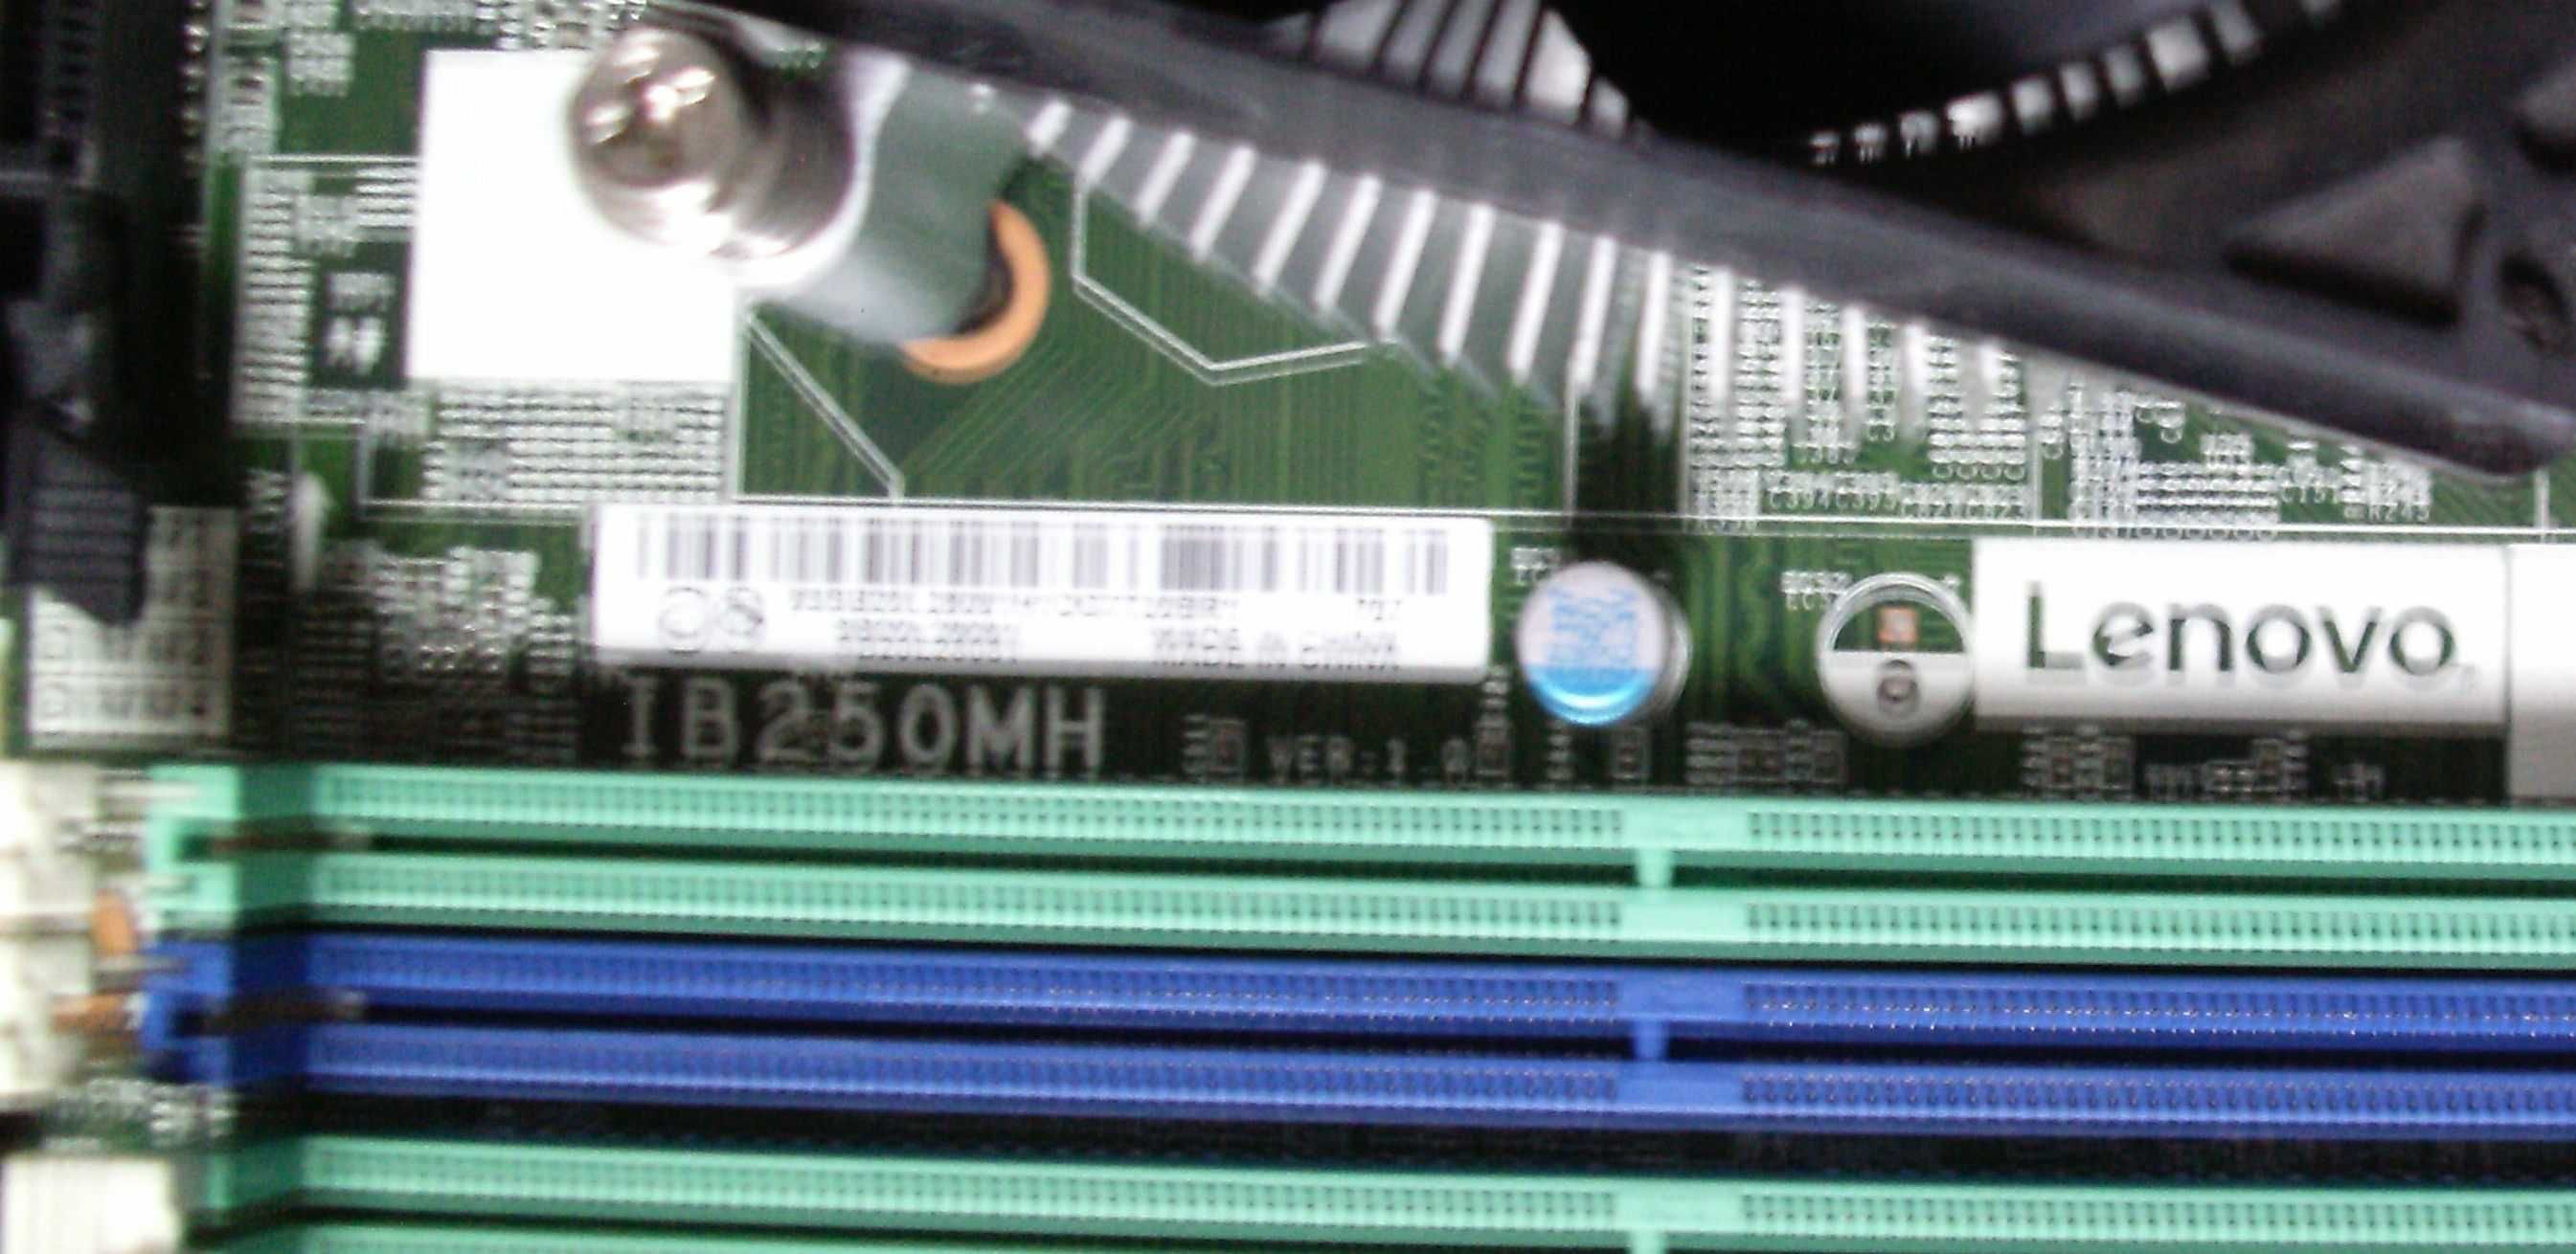 Lenovo ThinkCentre M710s IB250HM G4560 4x DDR4